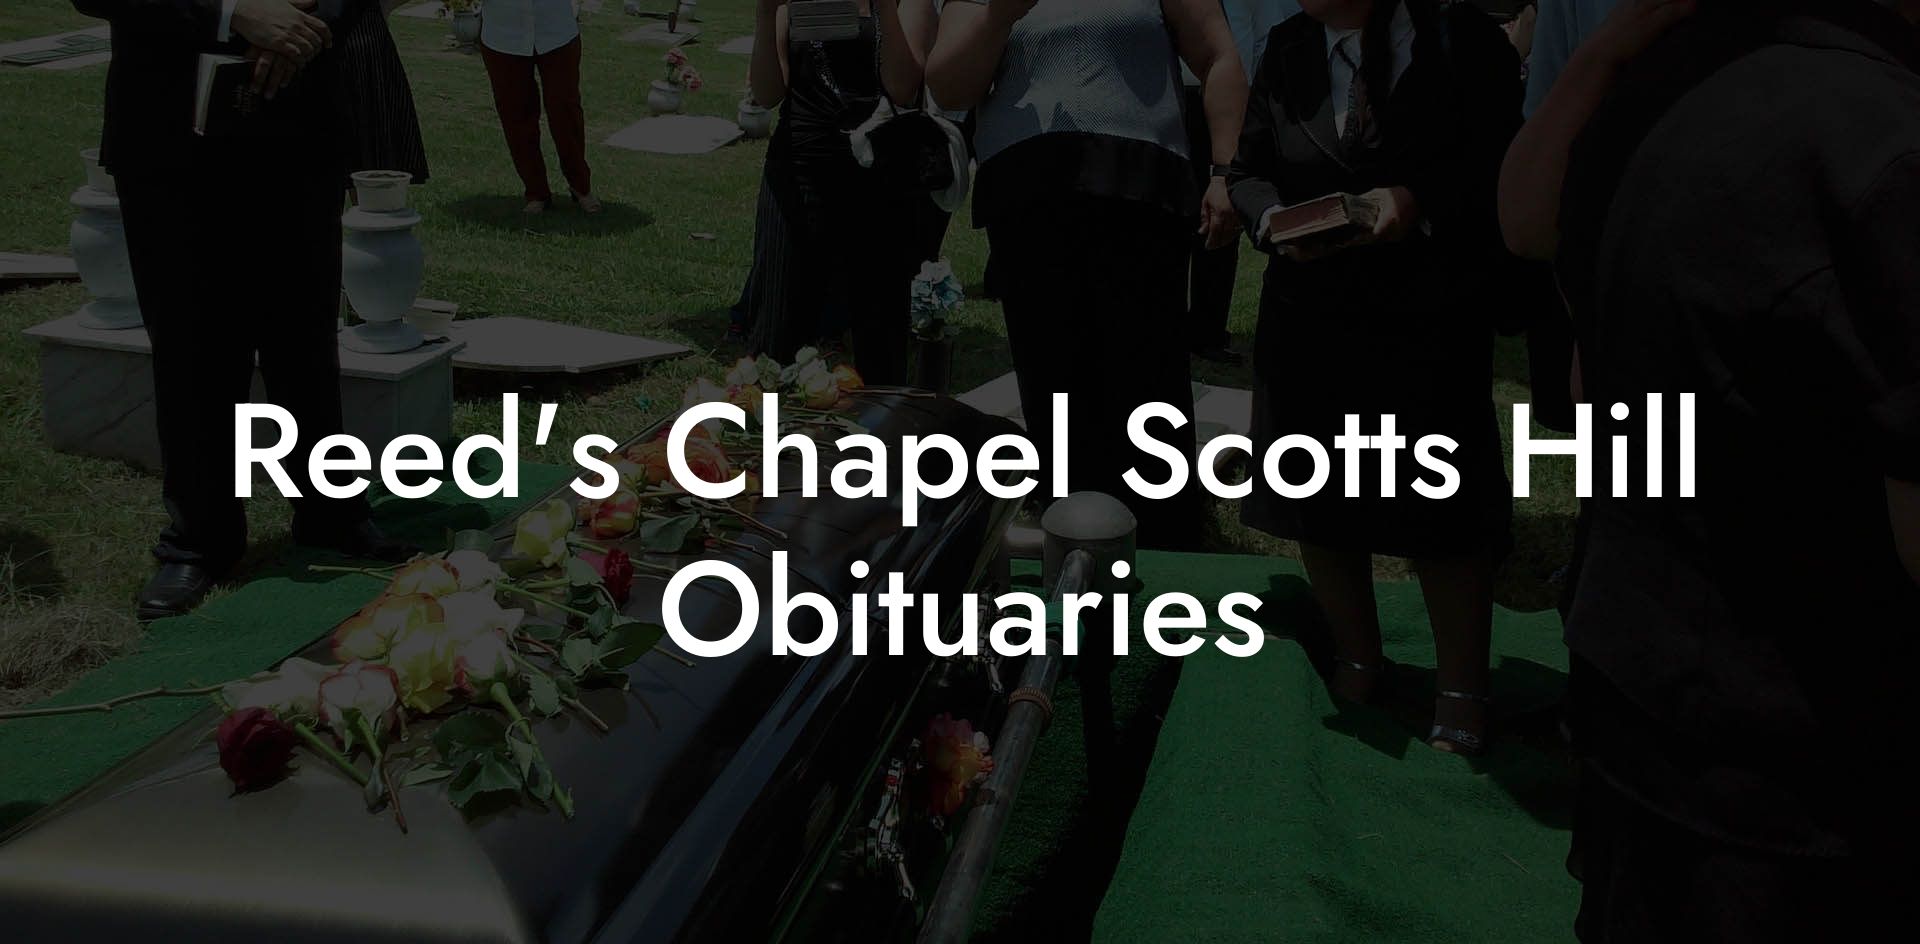 Reed's Chapel Scotts Hill Obituaries